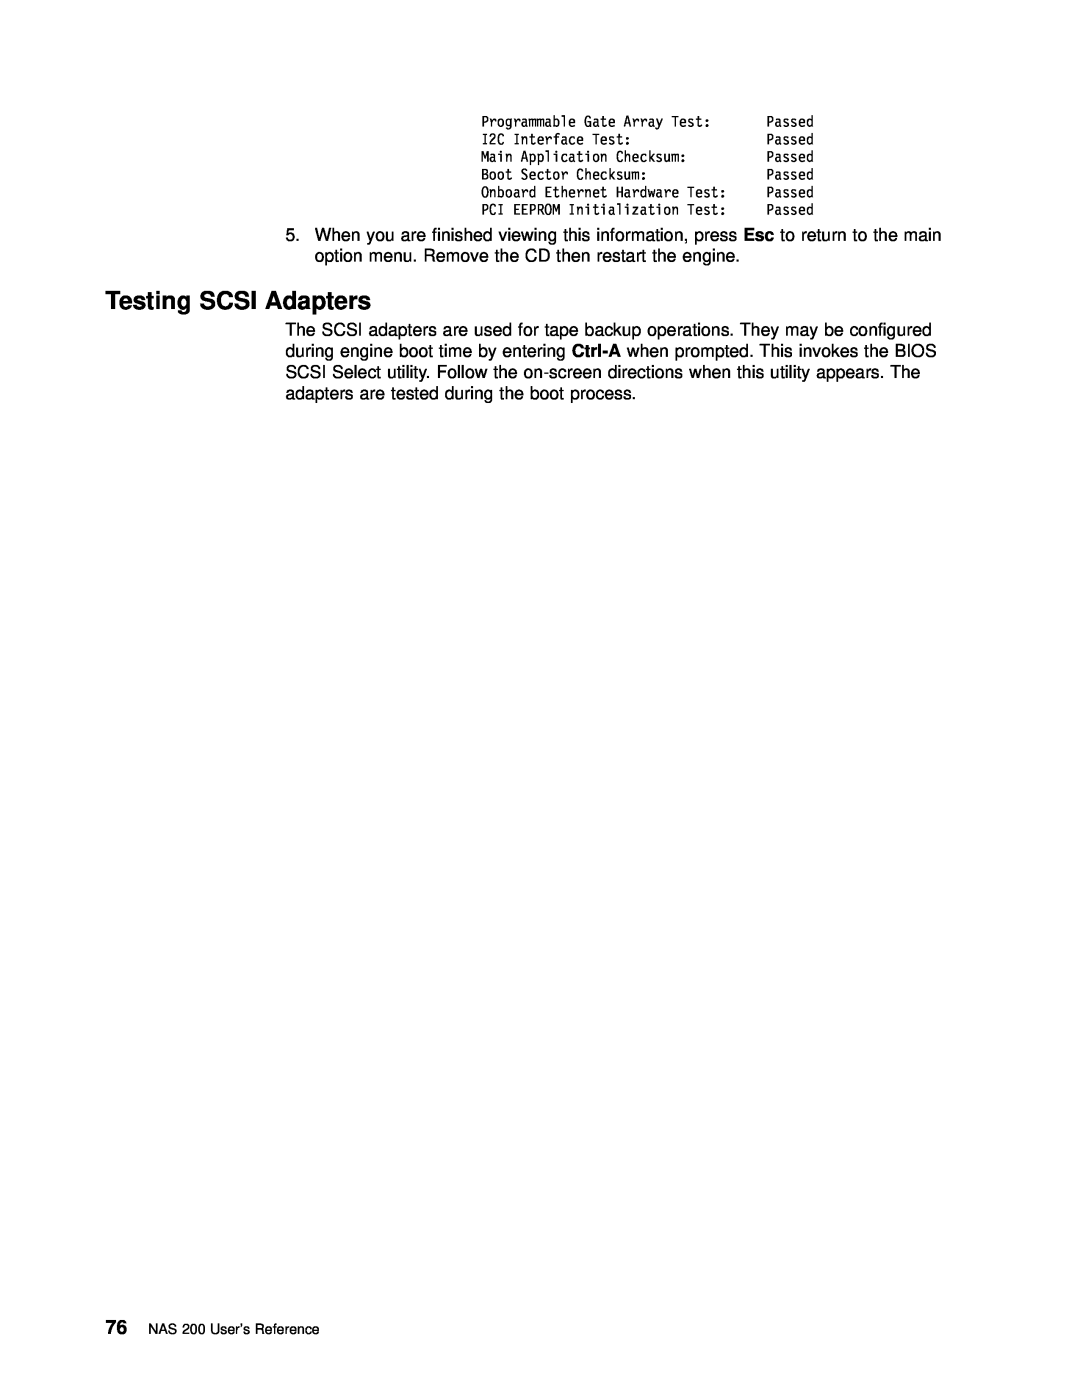 IBM 201 manual Testing SCSI Adapters, NAS 200 User’s Reference 